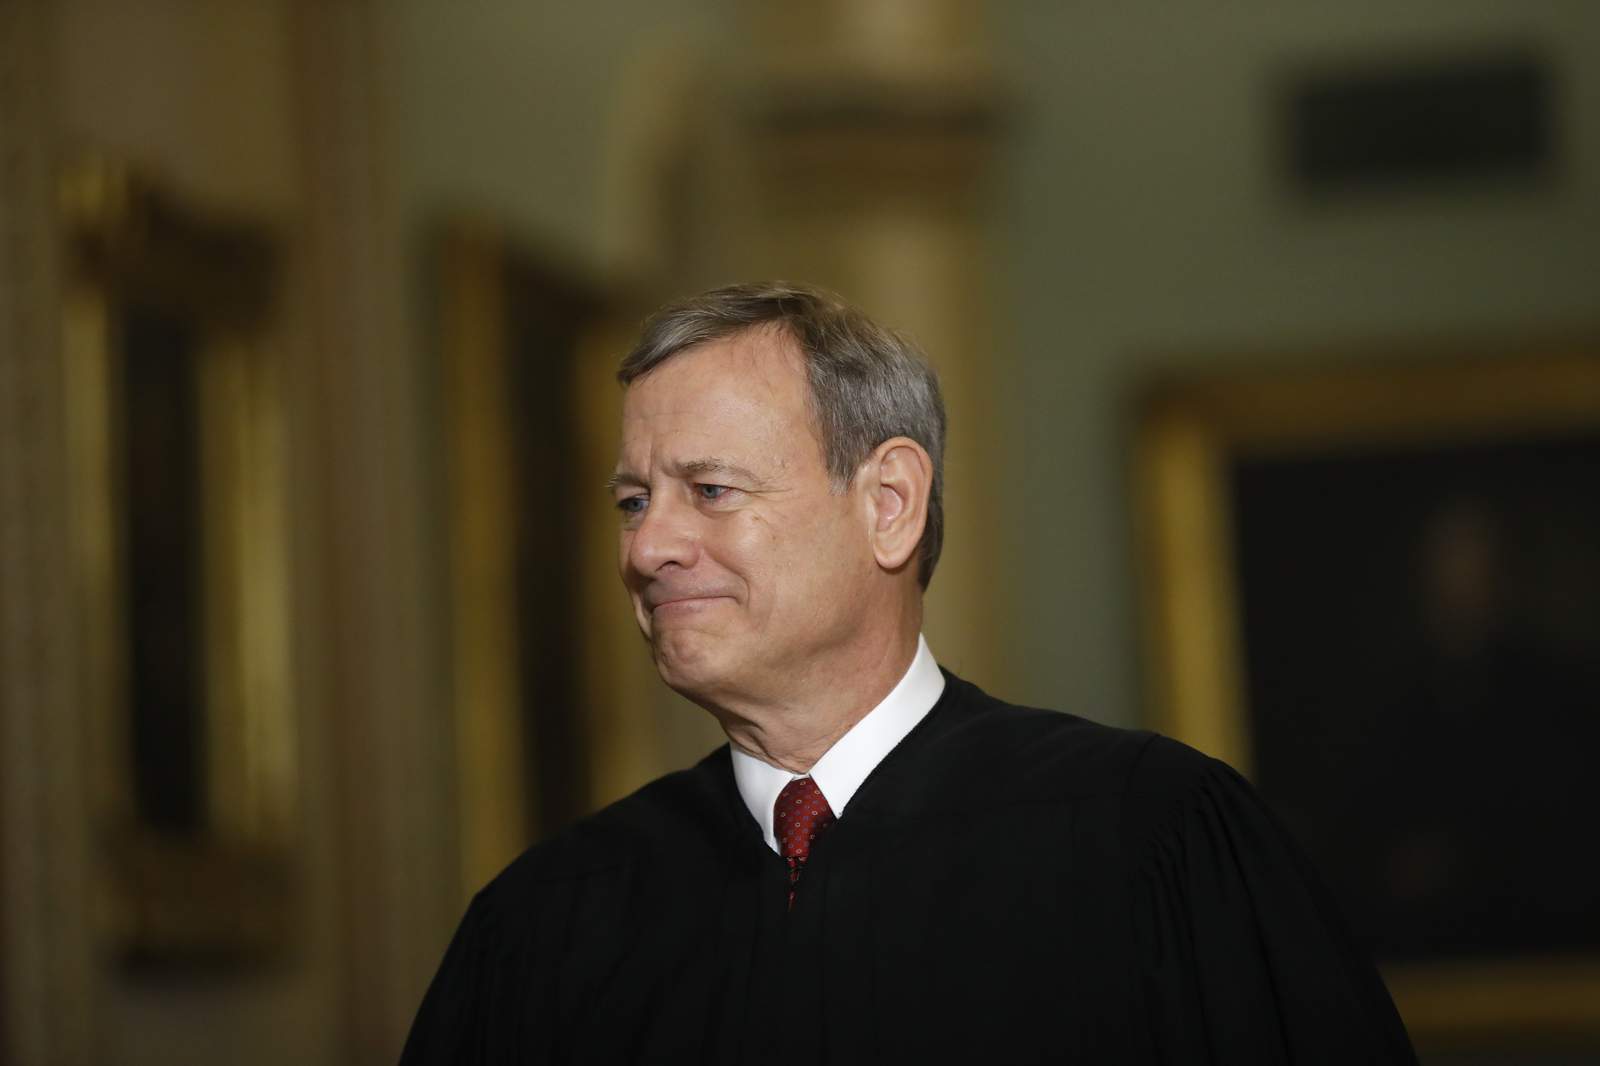 Roberts a pivotal vote in the Supreme Court's big opinions